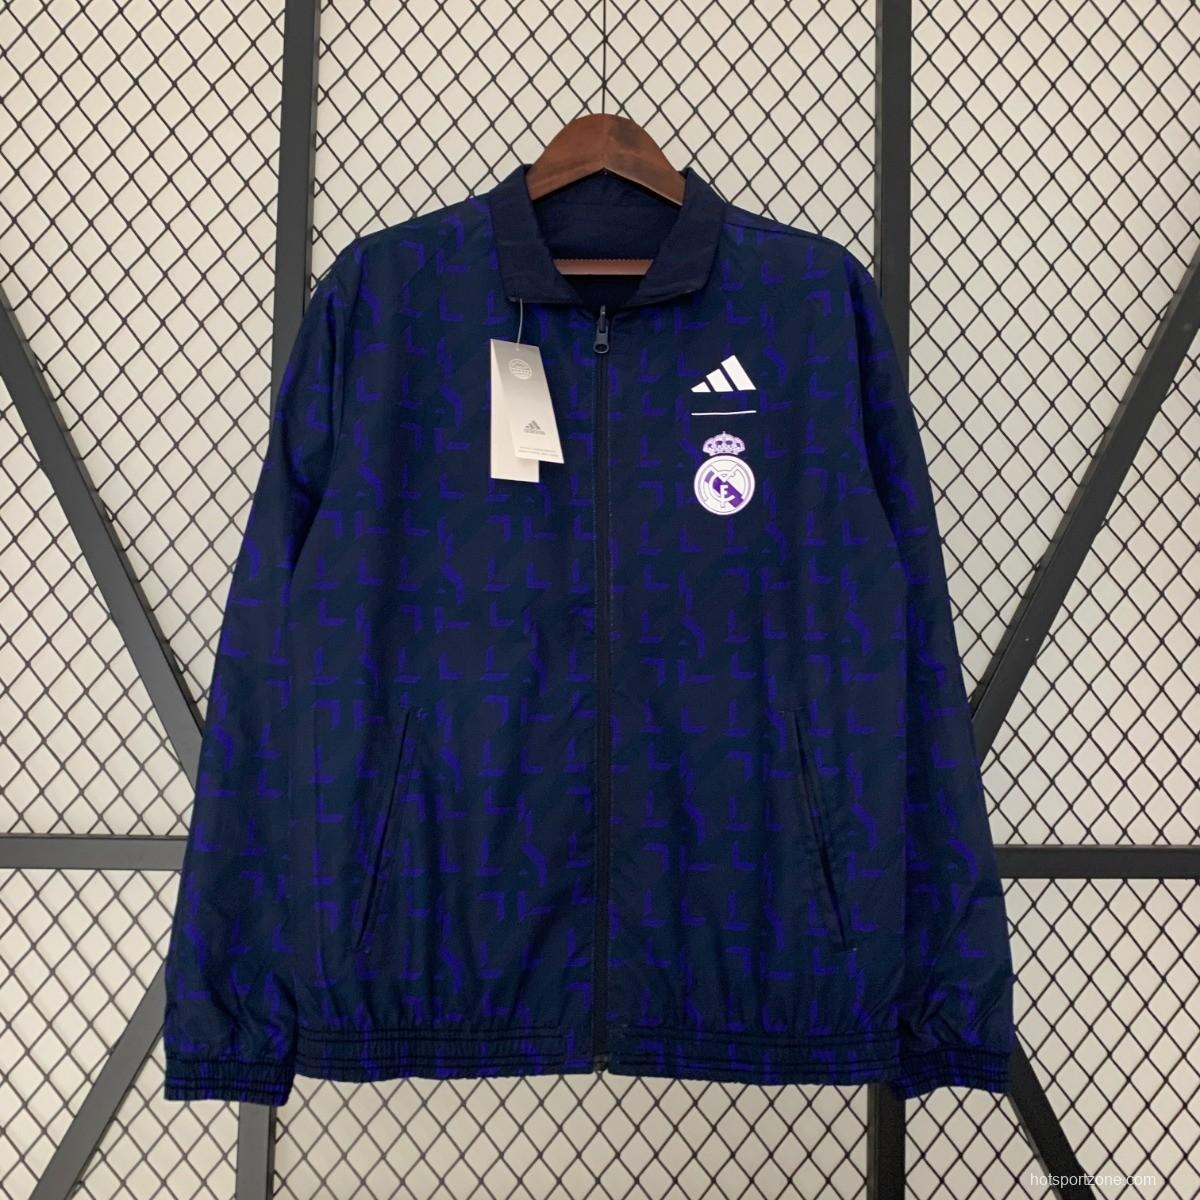 23/24 Real Madrid Navy Reversible Full Zipper Jacket